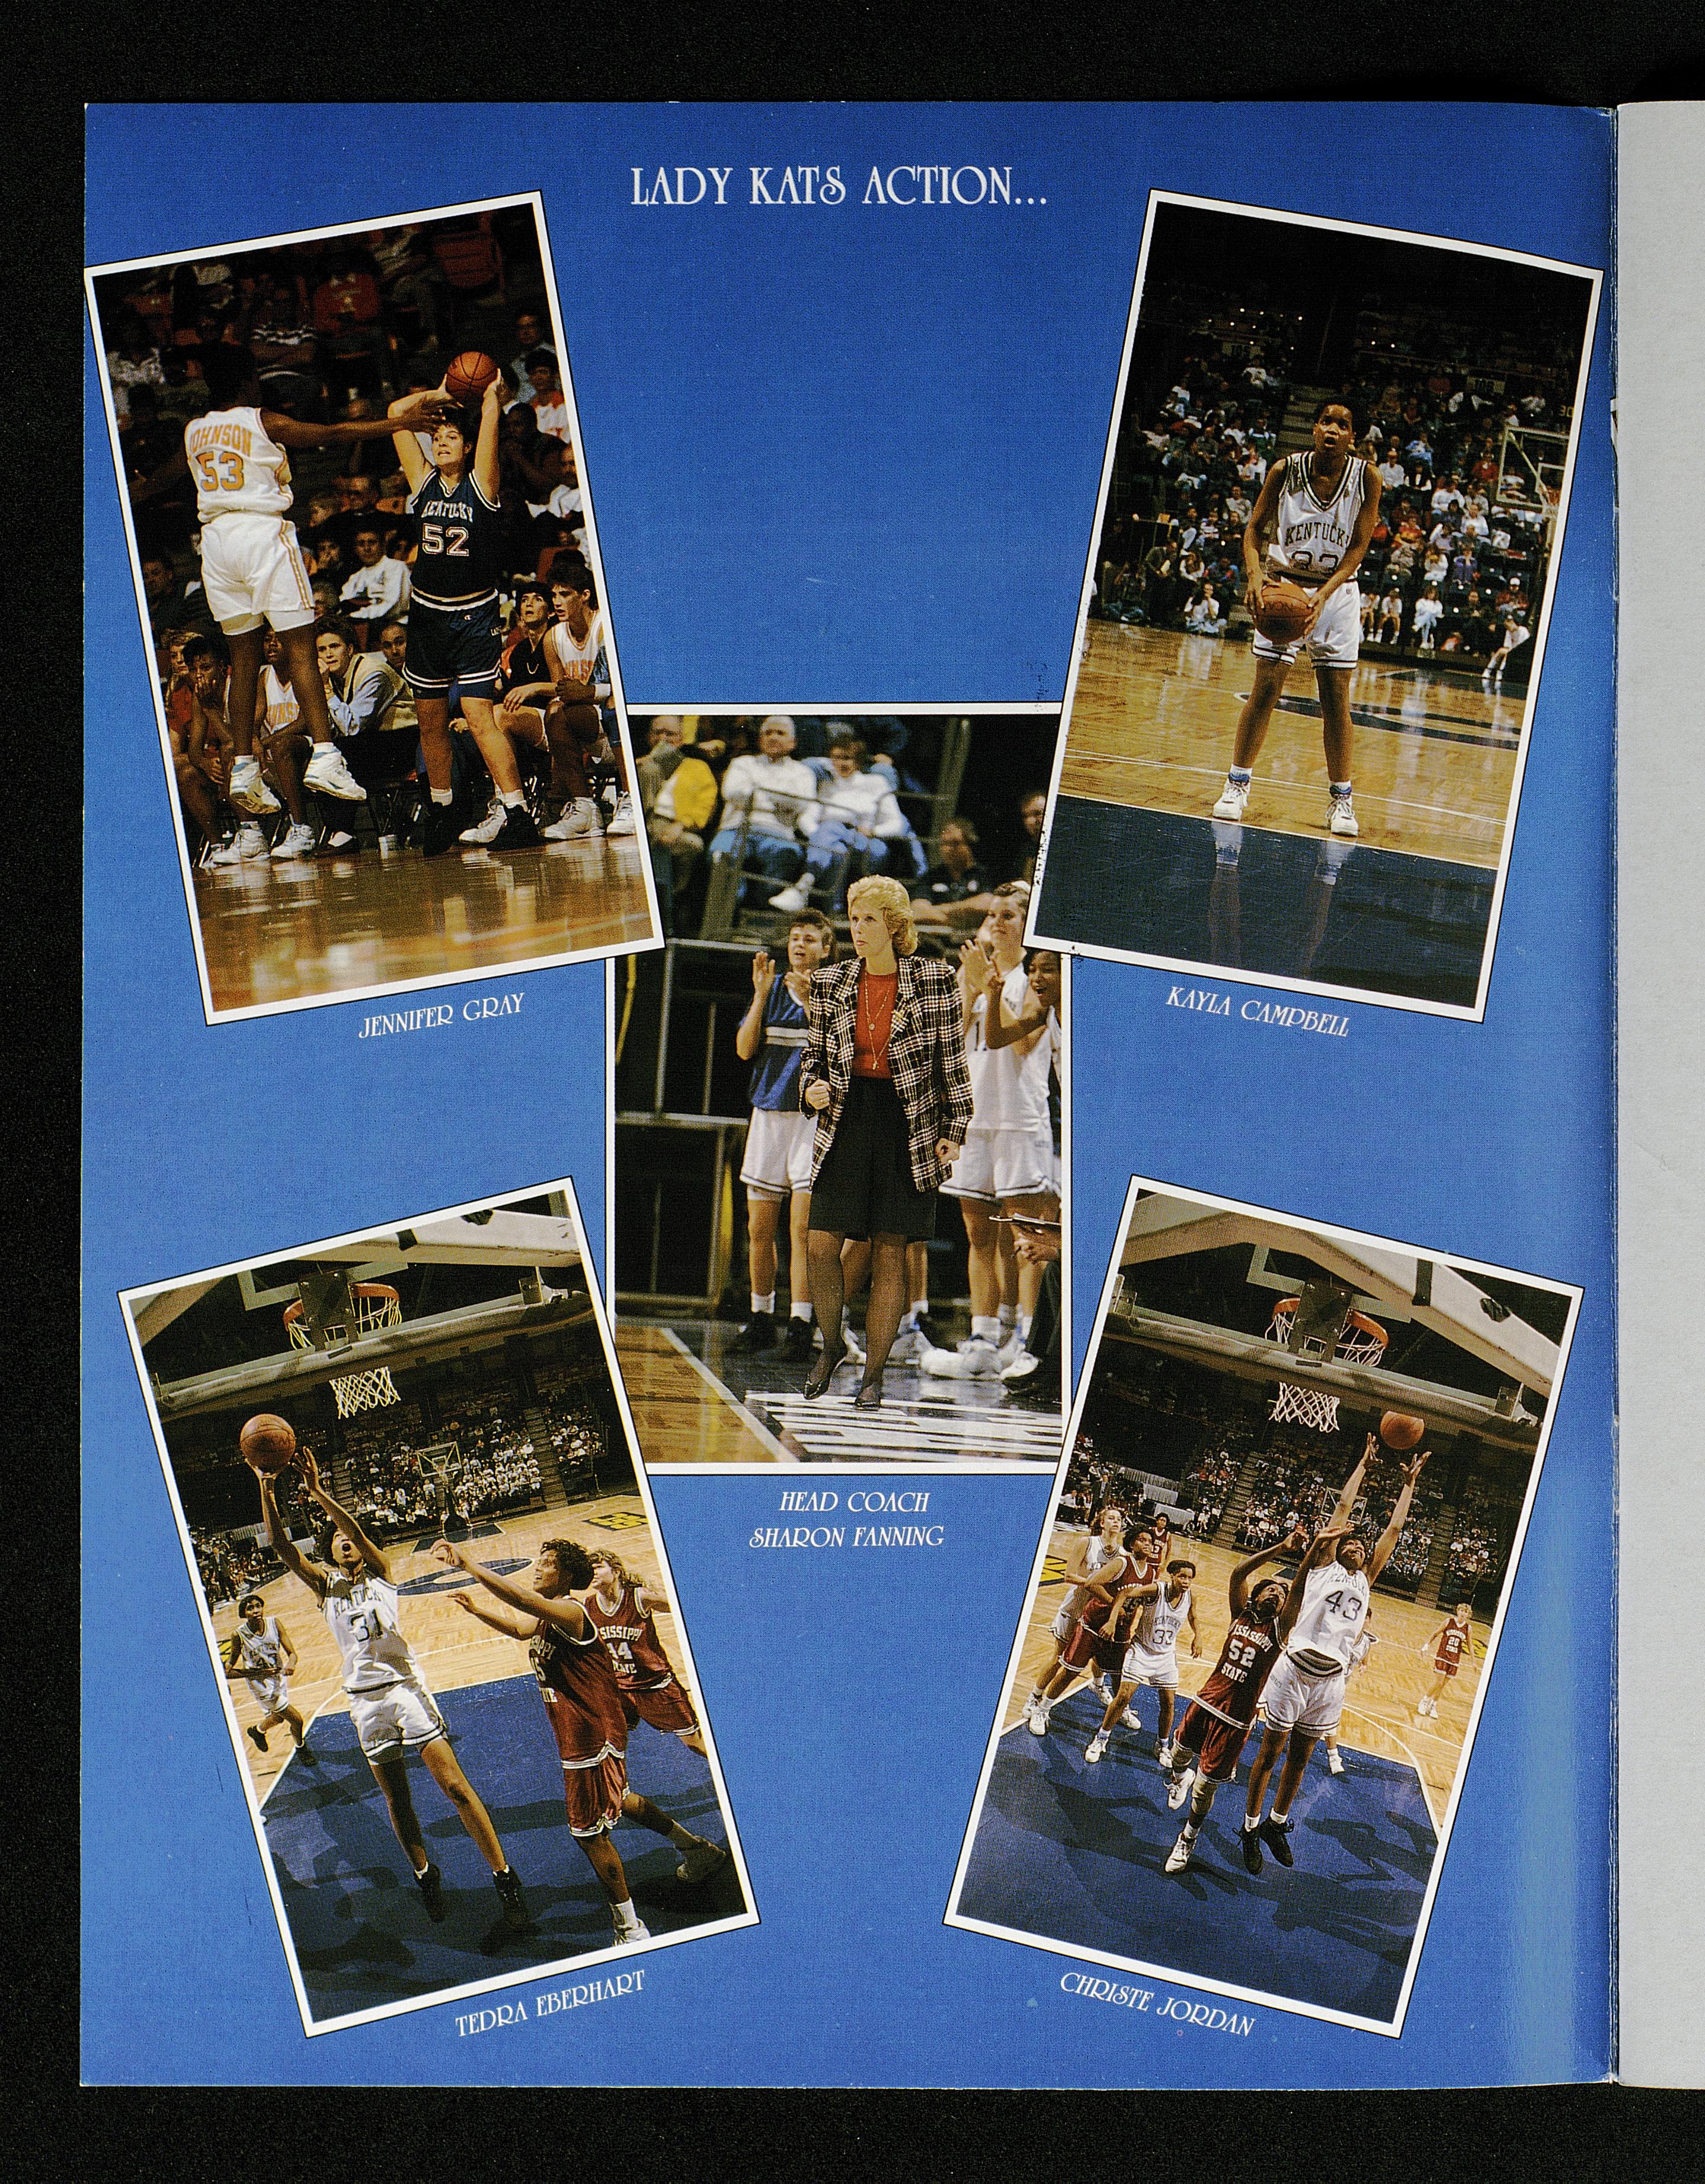 University of Kentucky women's basketball (Lady Kats) facts book 